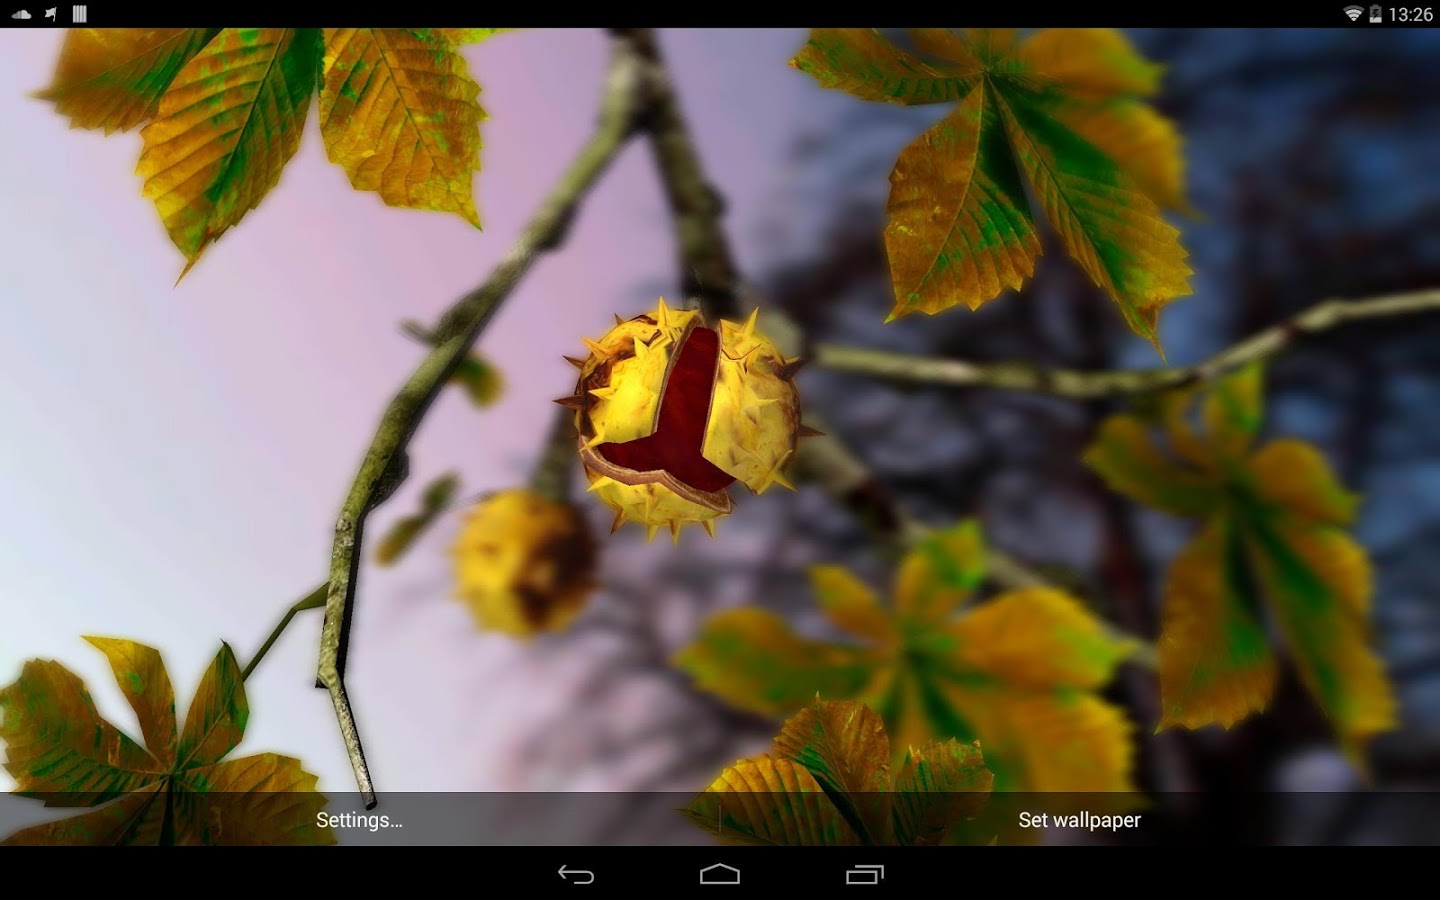 Autumn Leaves in HD Gyro 3D XL